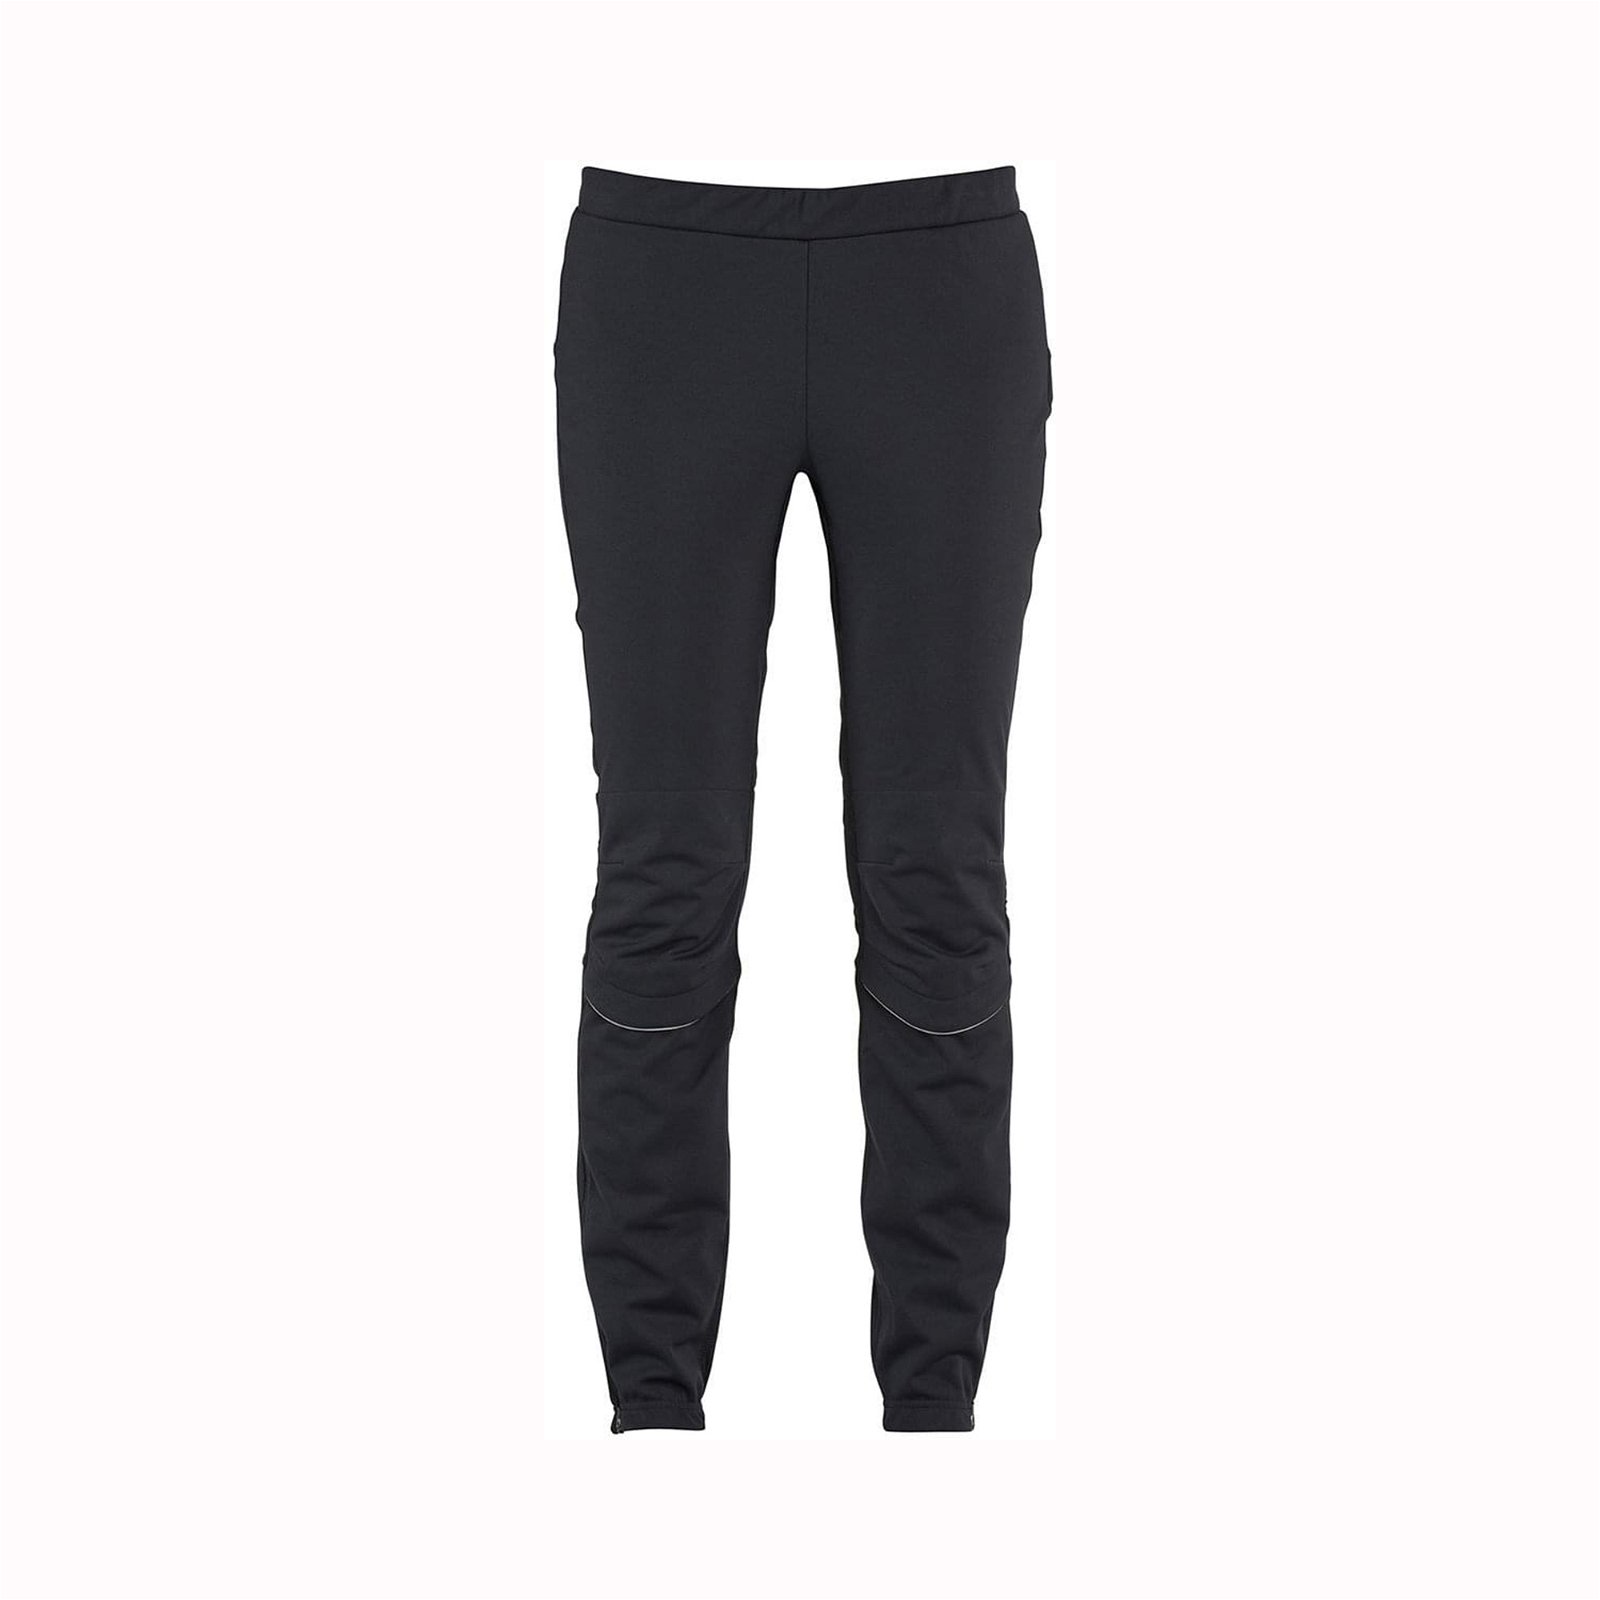 Rossignol Softshell Kadın Kayak Pantolonu - Siyah - 1